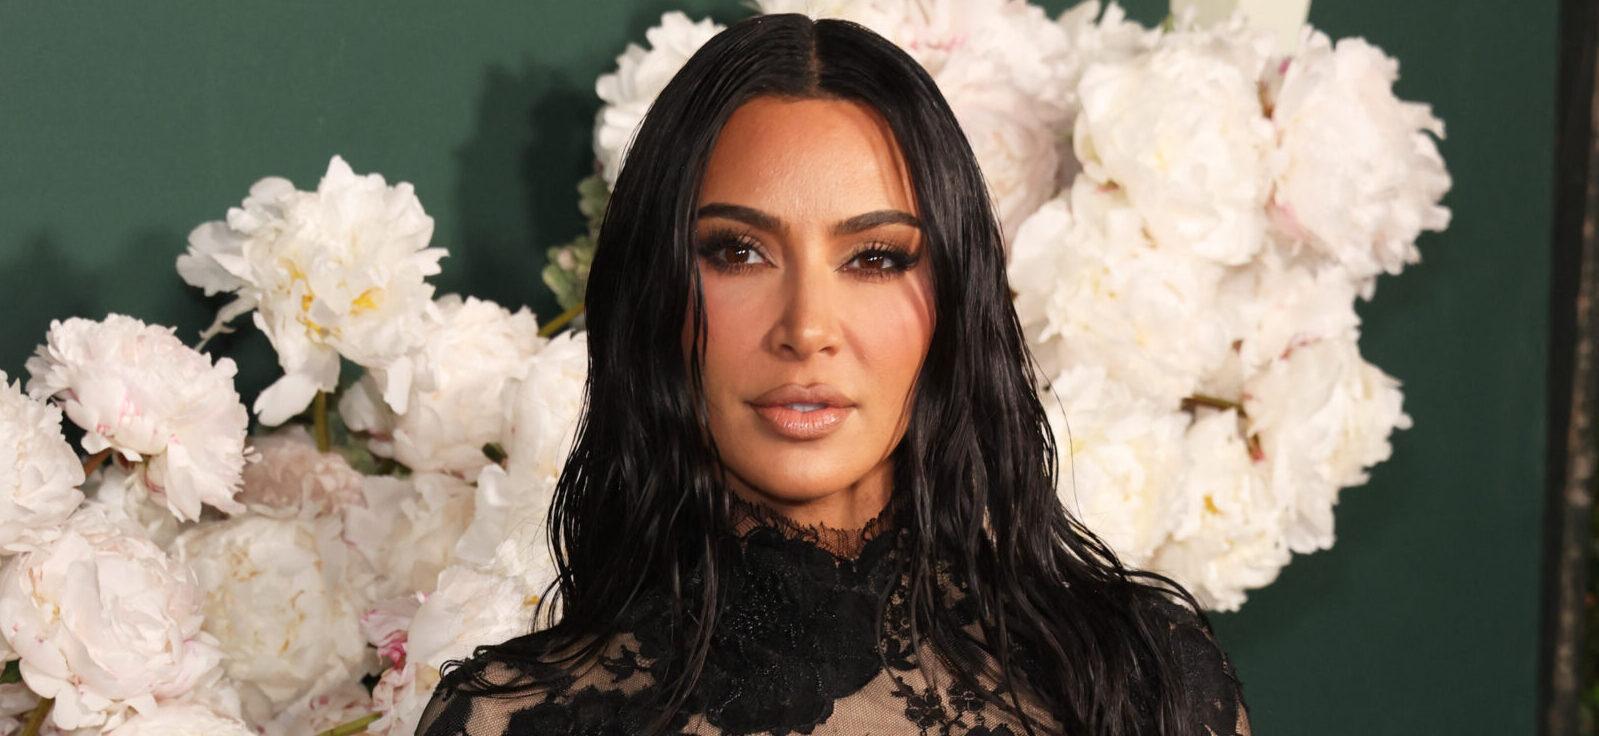 Kim Kardashian Becomes Balenciaga's Brand Ambassador After BDSM Scandal